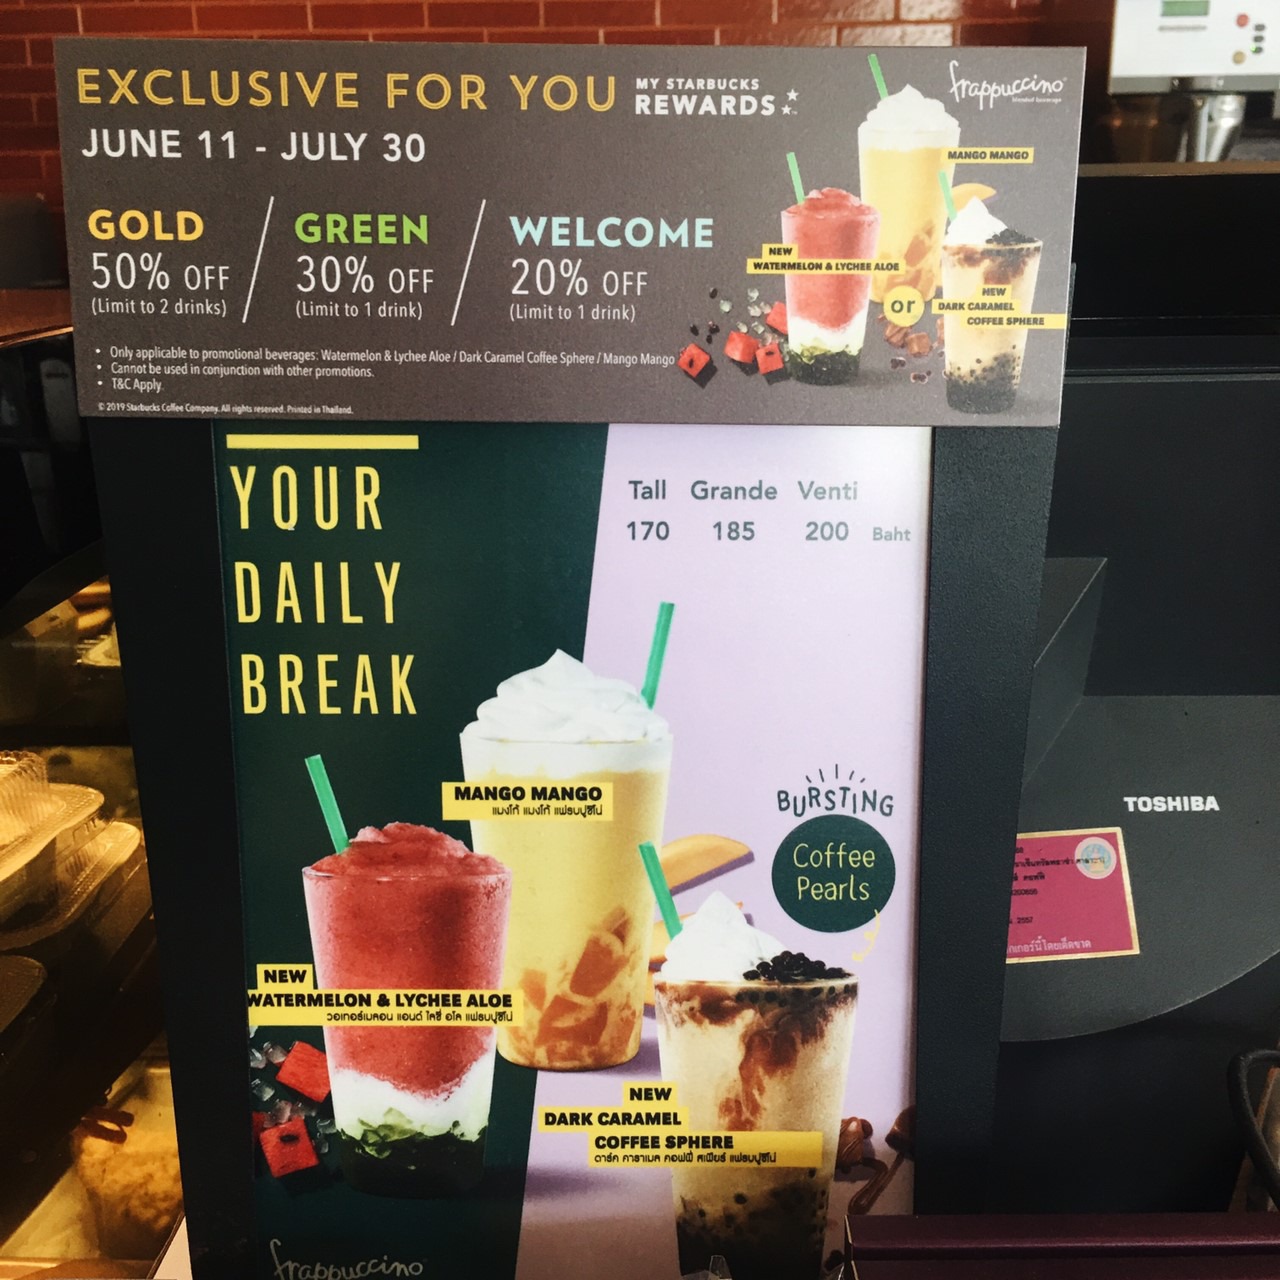 Starbucks ในประเทศสหรัฐอเมริกา ที่ได้เริ่มทดลองขายเมนูเครื่องดื่มพร้อมท็อปปิ้งอย่าง ‘ไข่มุกป๊อปรสกาแฟ’ ภาพจาก／ชี้เป้าโปรถูก by Redprice